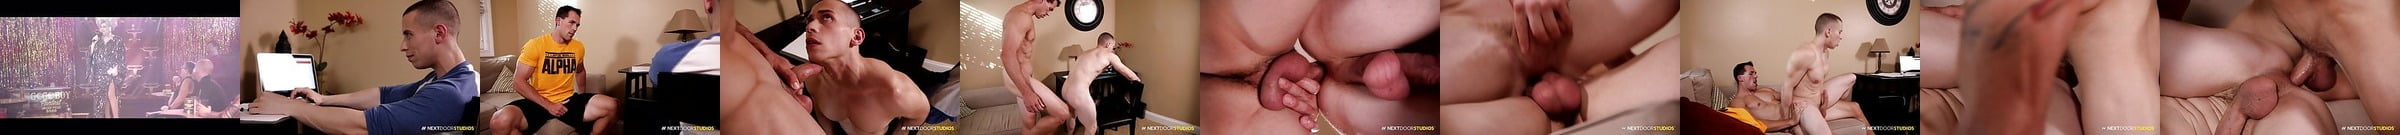 Nextdoorbuddies Gay Porn Videos